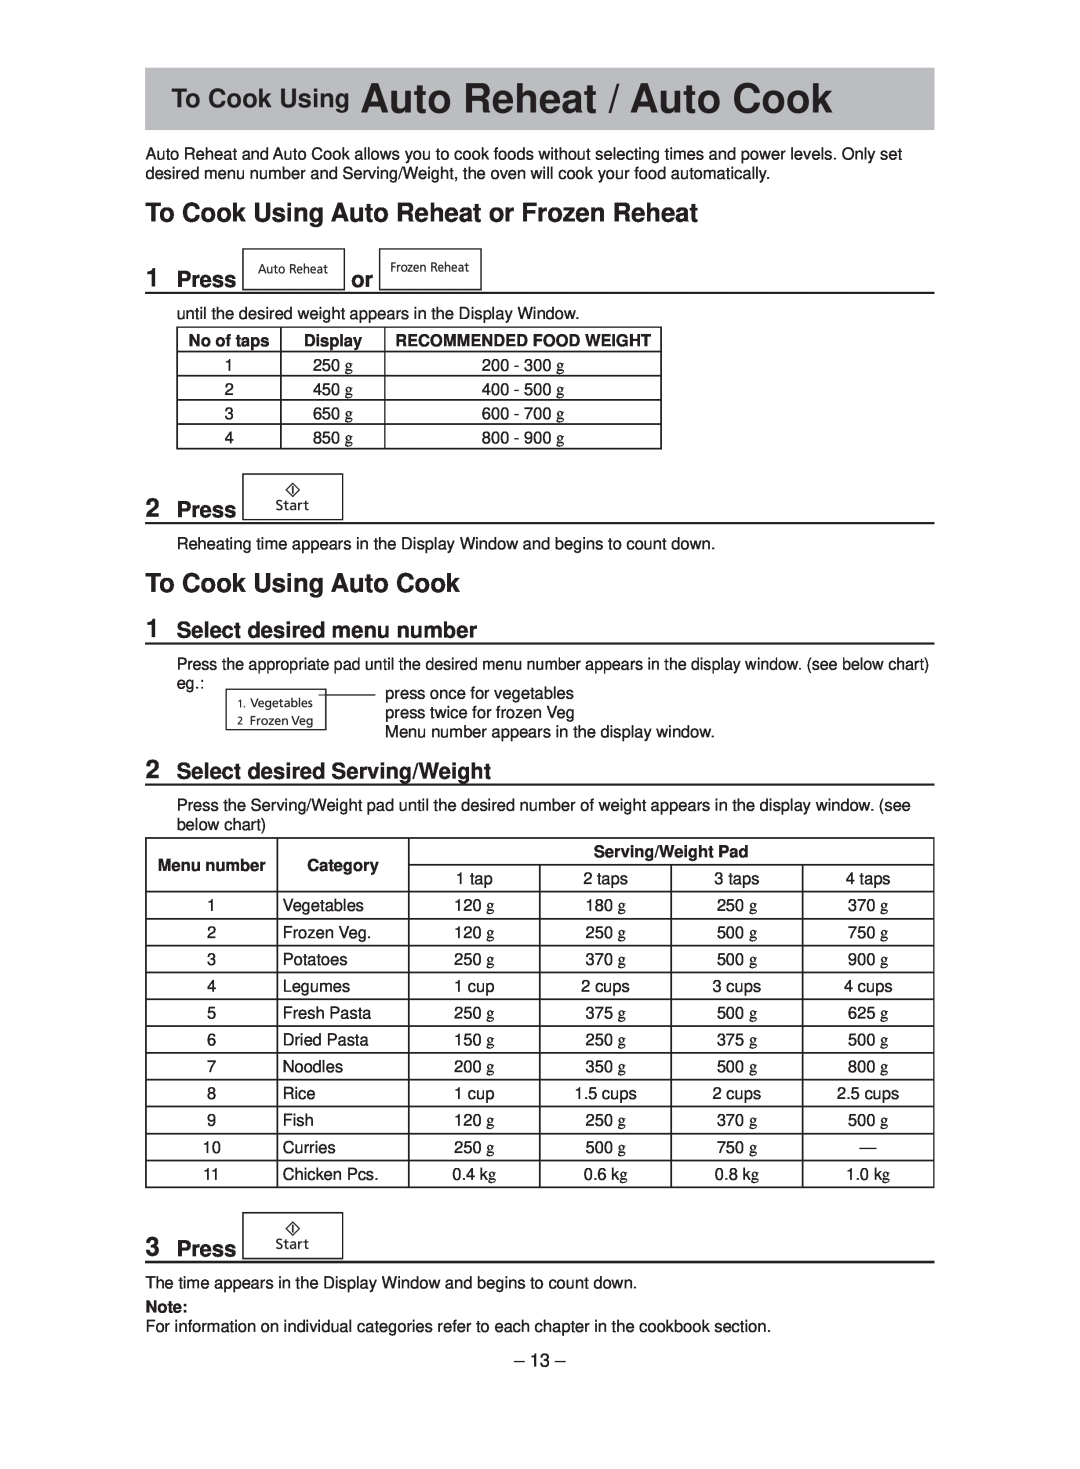 Panasonic NN-ST641W manual To Cook Using Auto Reheat / Auto Cook, To Cook Using Auto Reheat or Frozen Reheat, Press 